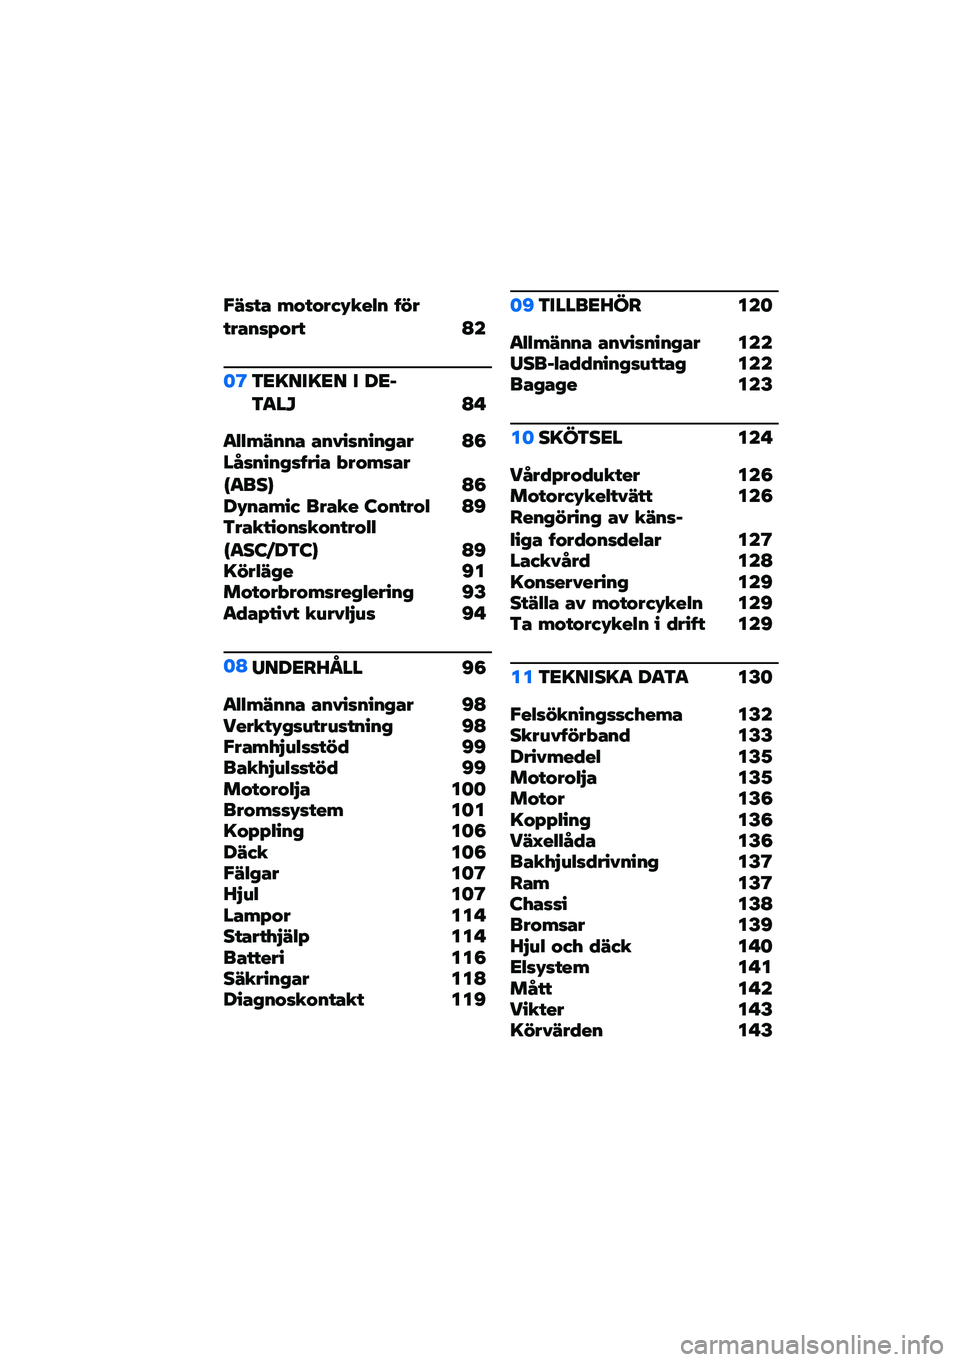 BMW MOTORRAD R NINE T SCRAMBLER 2020  Instruktionsbok (in Swedish) �#�7�� �( �,�%� �%��)�+���.�& �6�$�� ��(�&��;�%��  �B�
�	�@�3�<�=���=�<� � ��<��3�
��M �B�!
�
�.�.�,�7�&�&�( �(�&����&��&��(� �B�8��>��&��&���6���( �-��%�,��(��H�
���